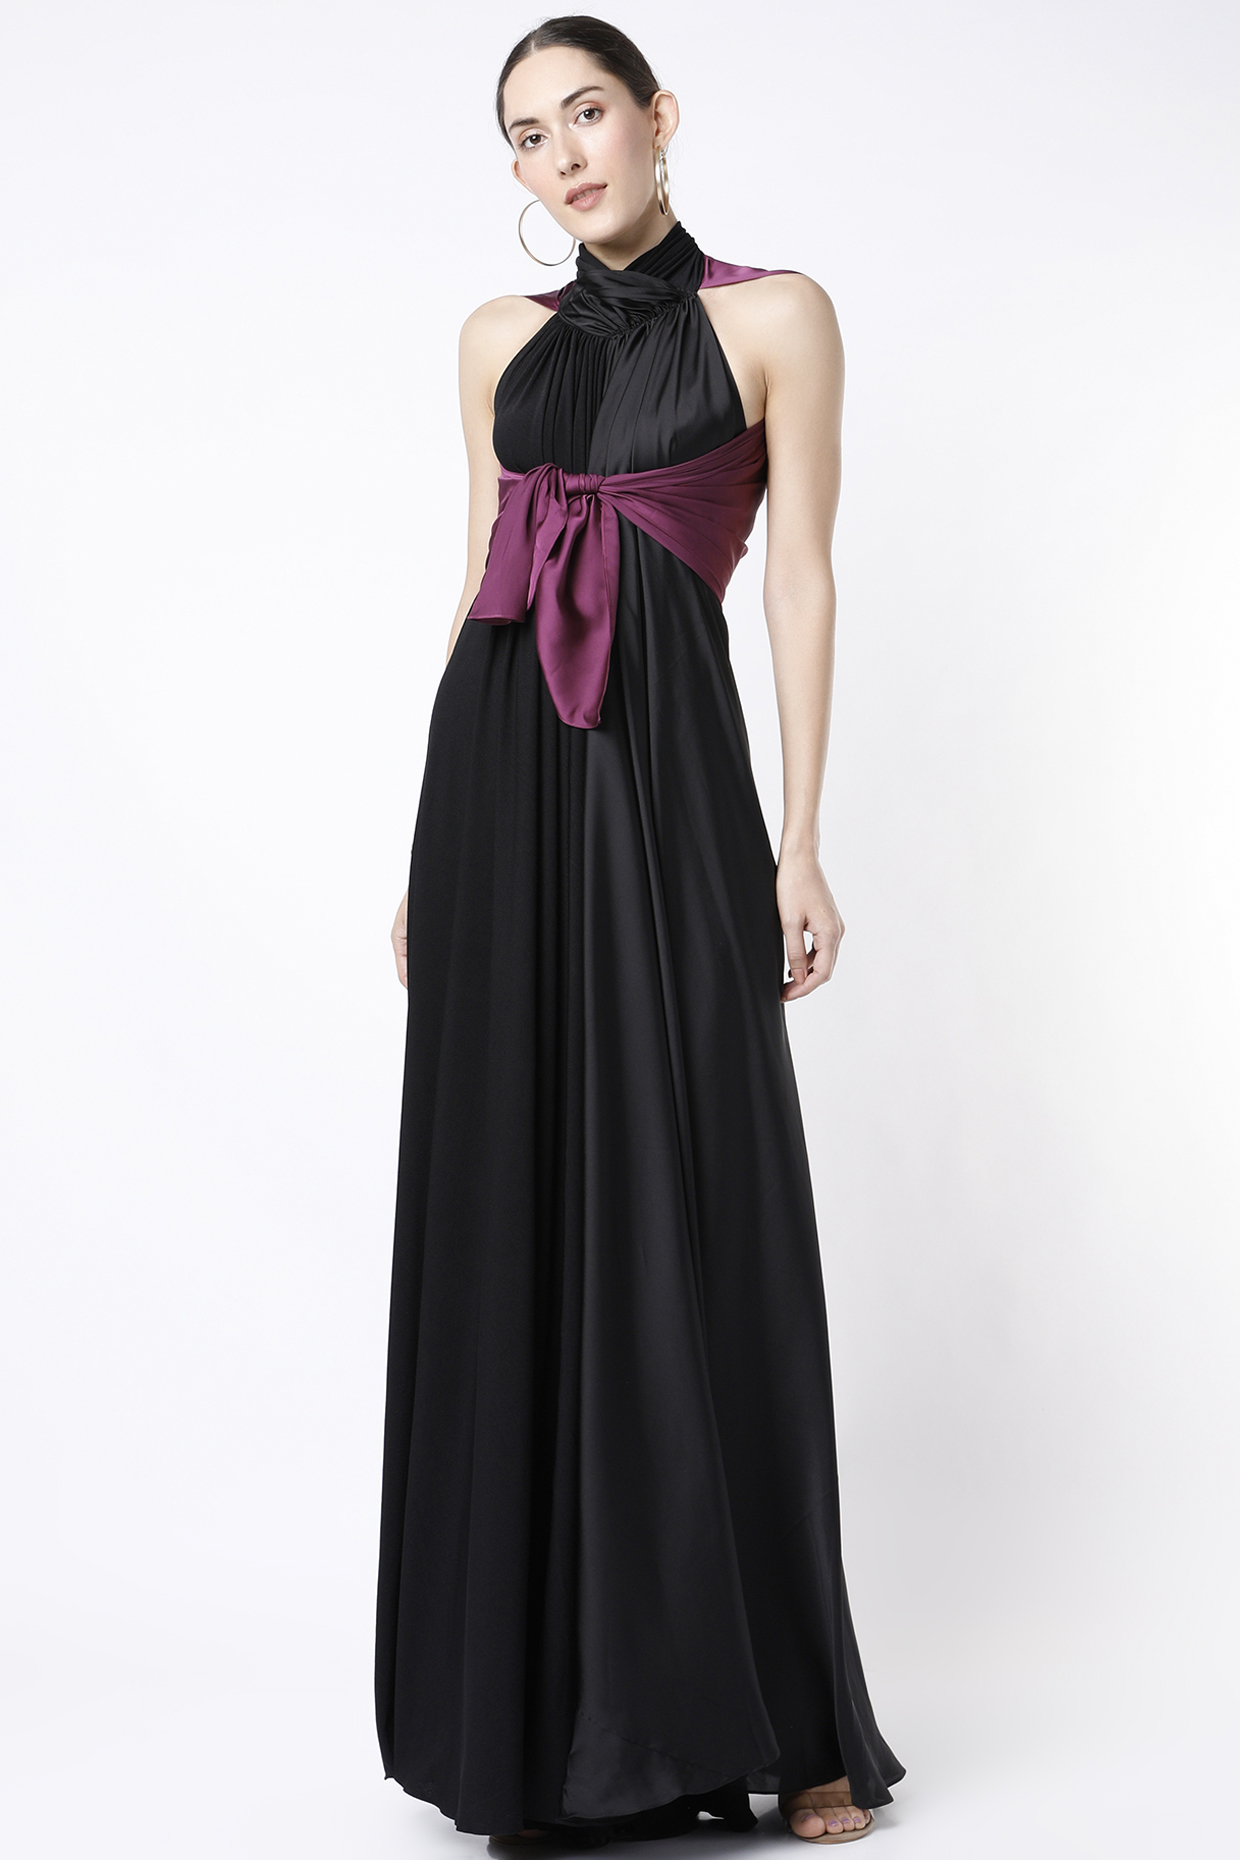 Black Jumpsuit Gown With Wine Tie-Up Cape